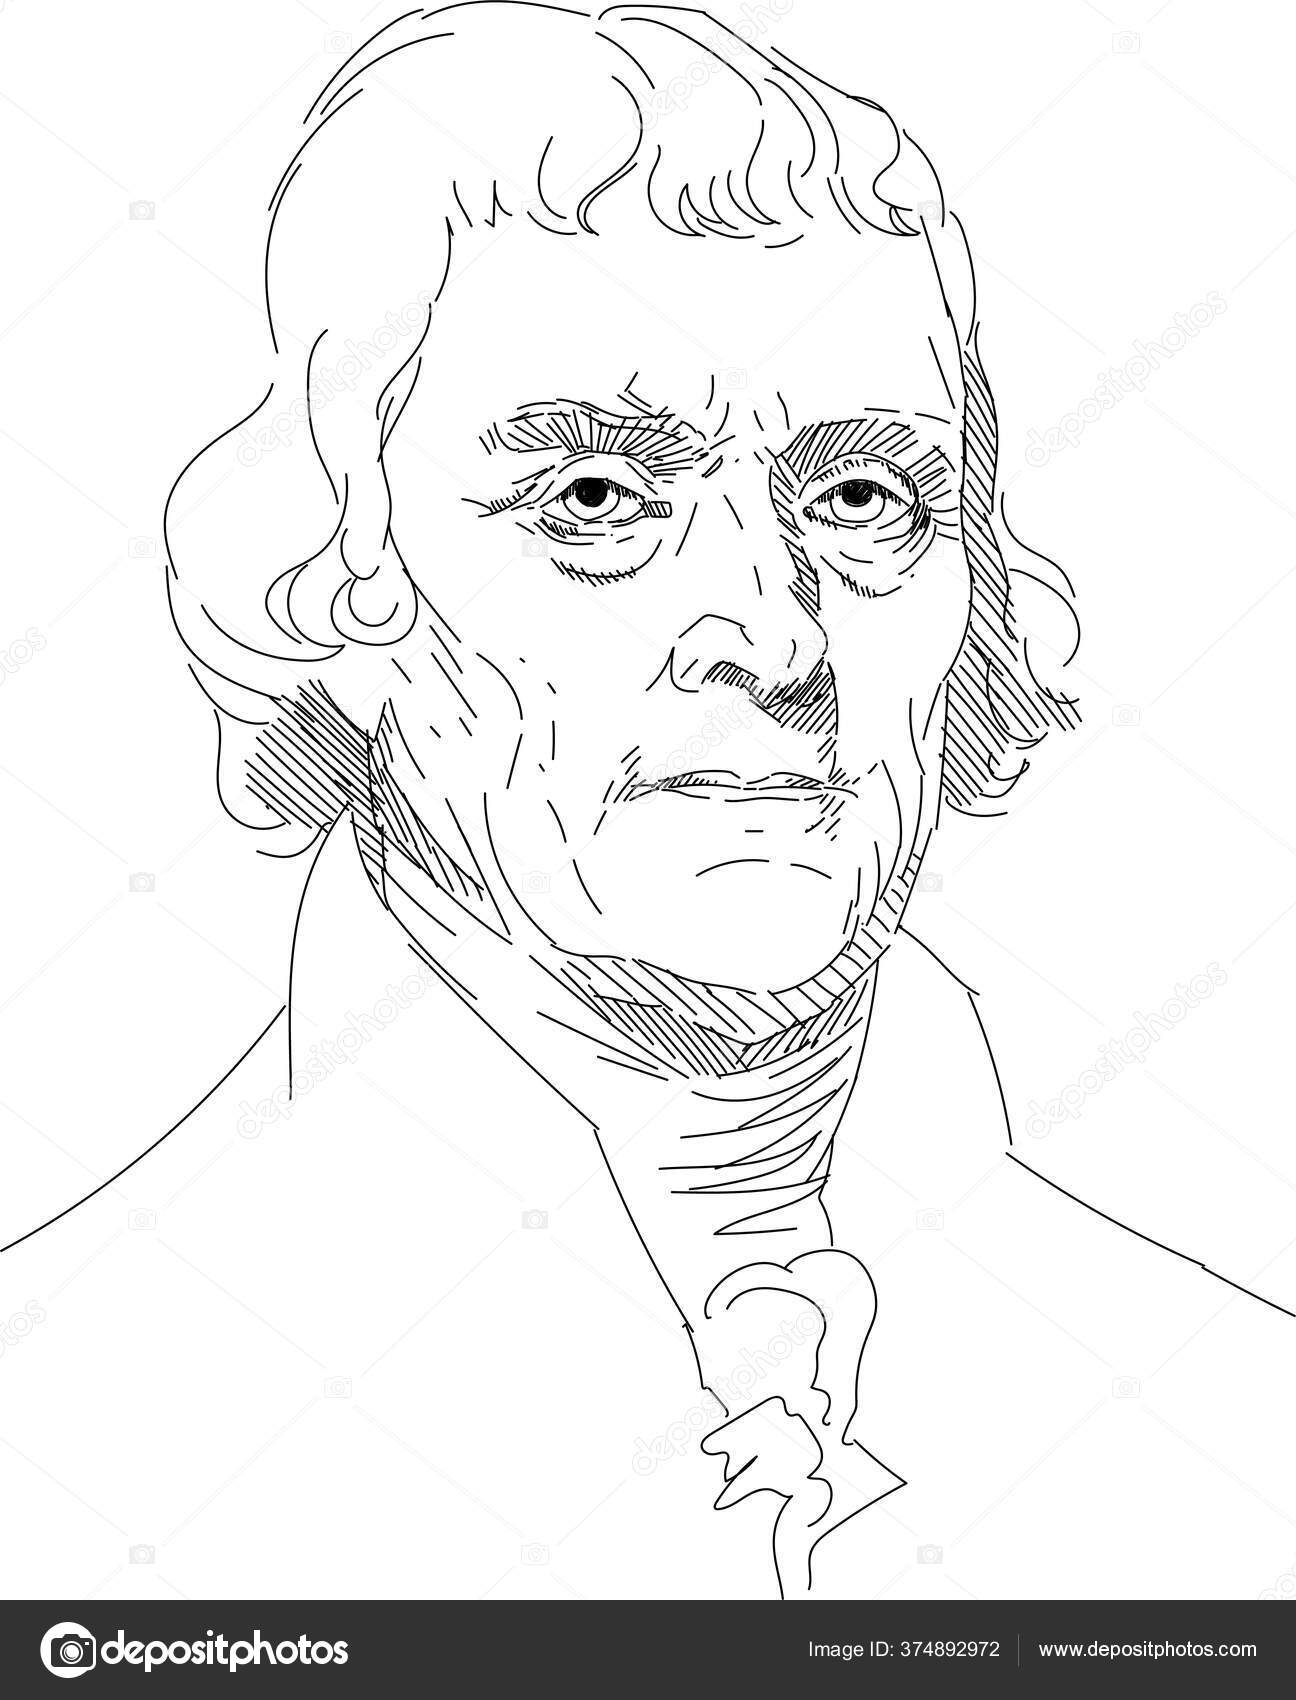 President Thomas Jefferson drawings  U S President drawing  How to draw  Thomas Jefferson easy  YouTube